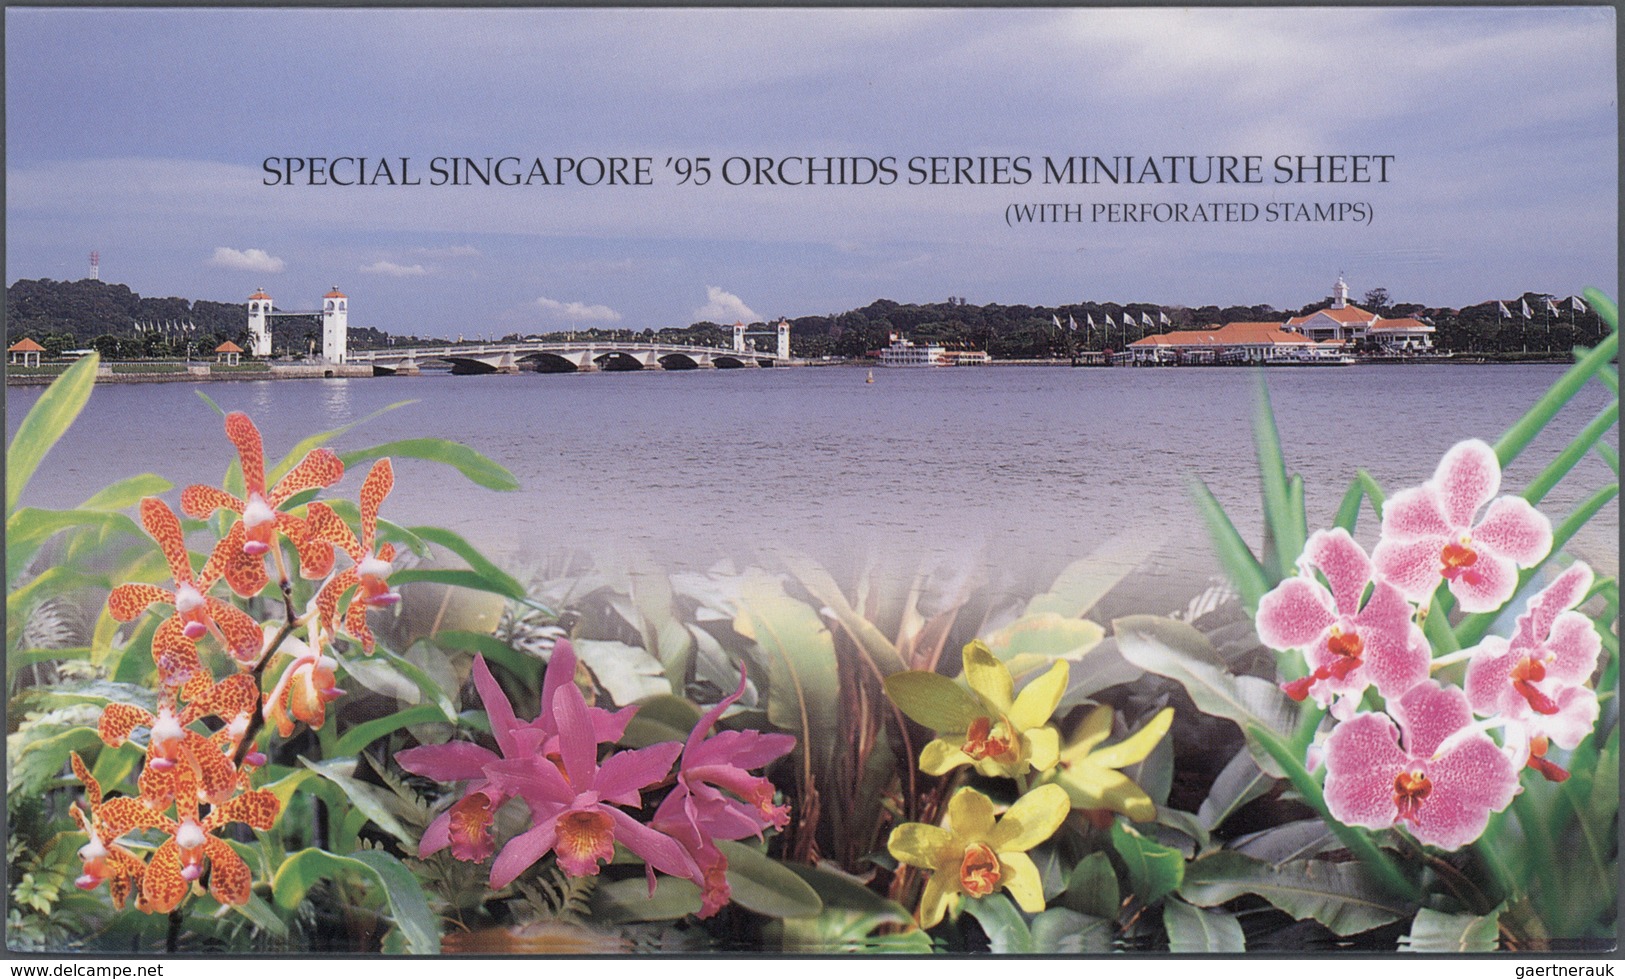 Singapur: 1995, Stamp Exhibition SINGAPORE '95 ("Orchids"), Special Souvenir Sheet With Orange Sheet - Singapur (...-1959)